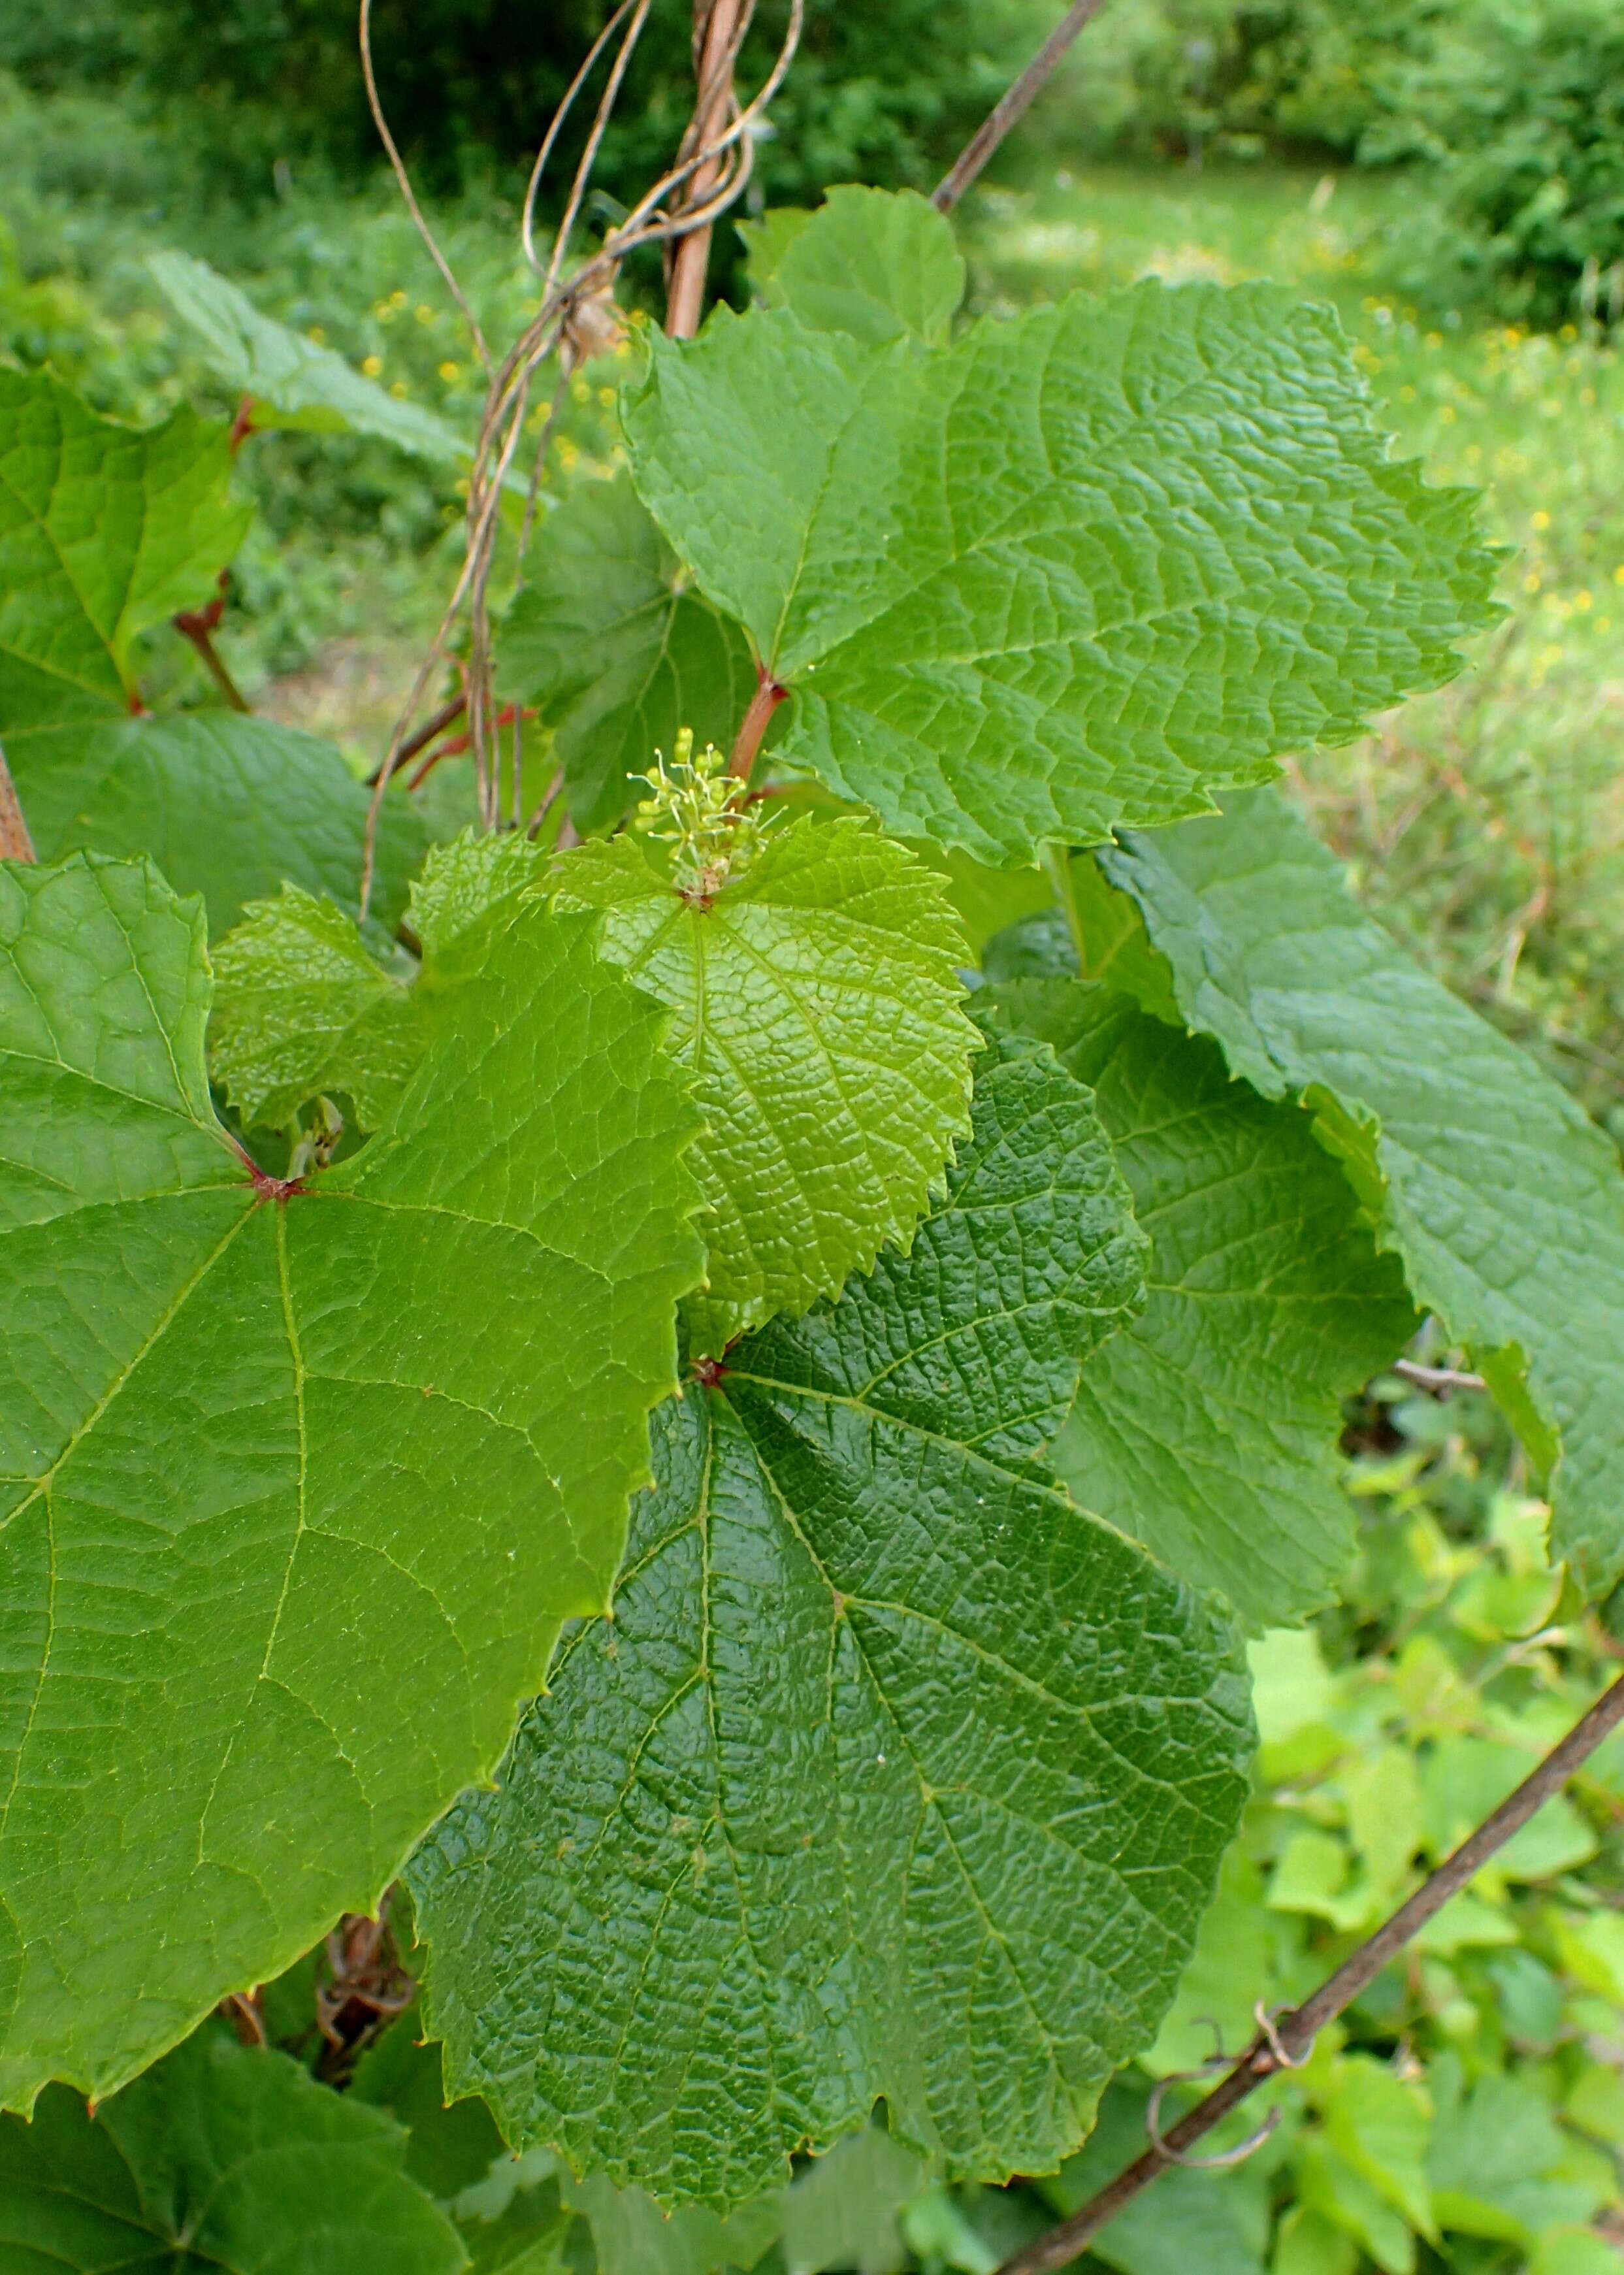 Image of Amur grape